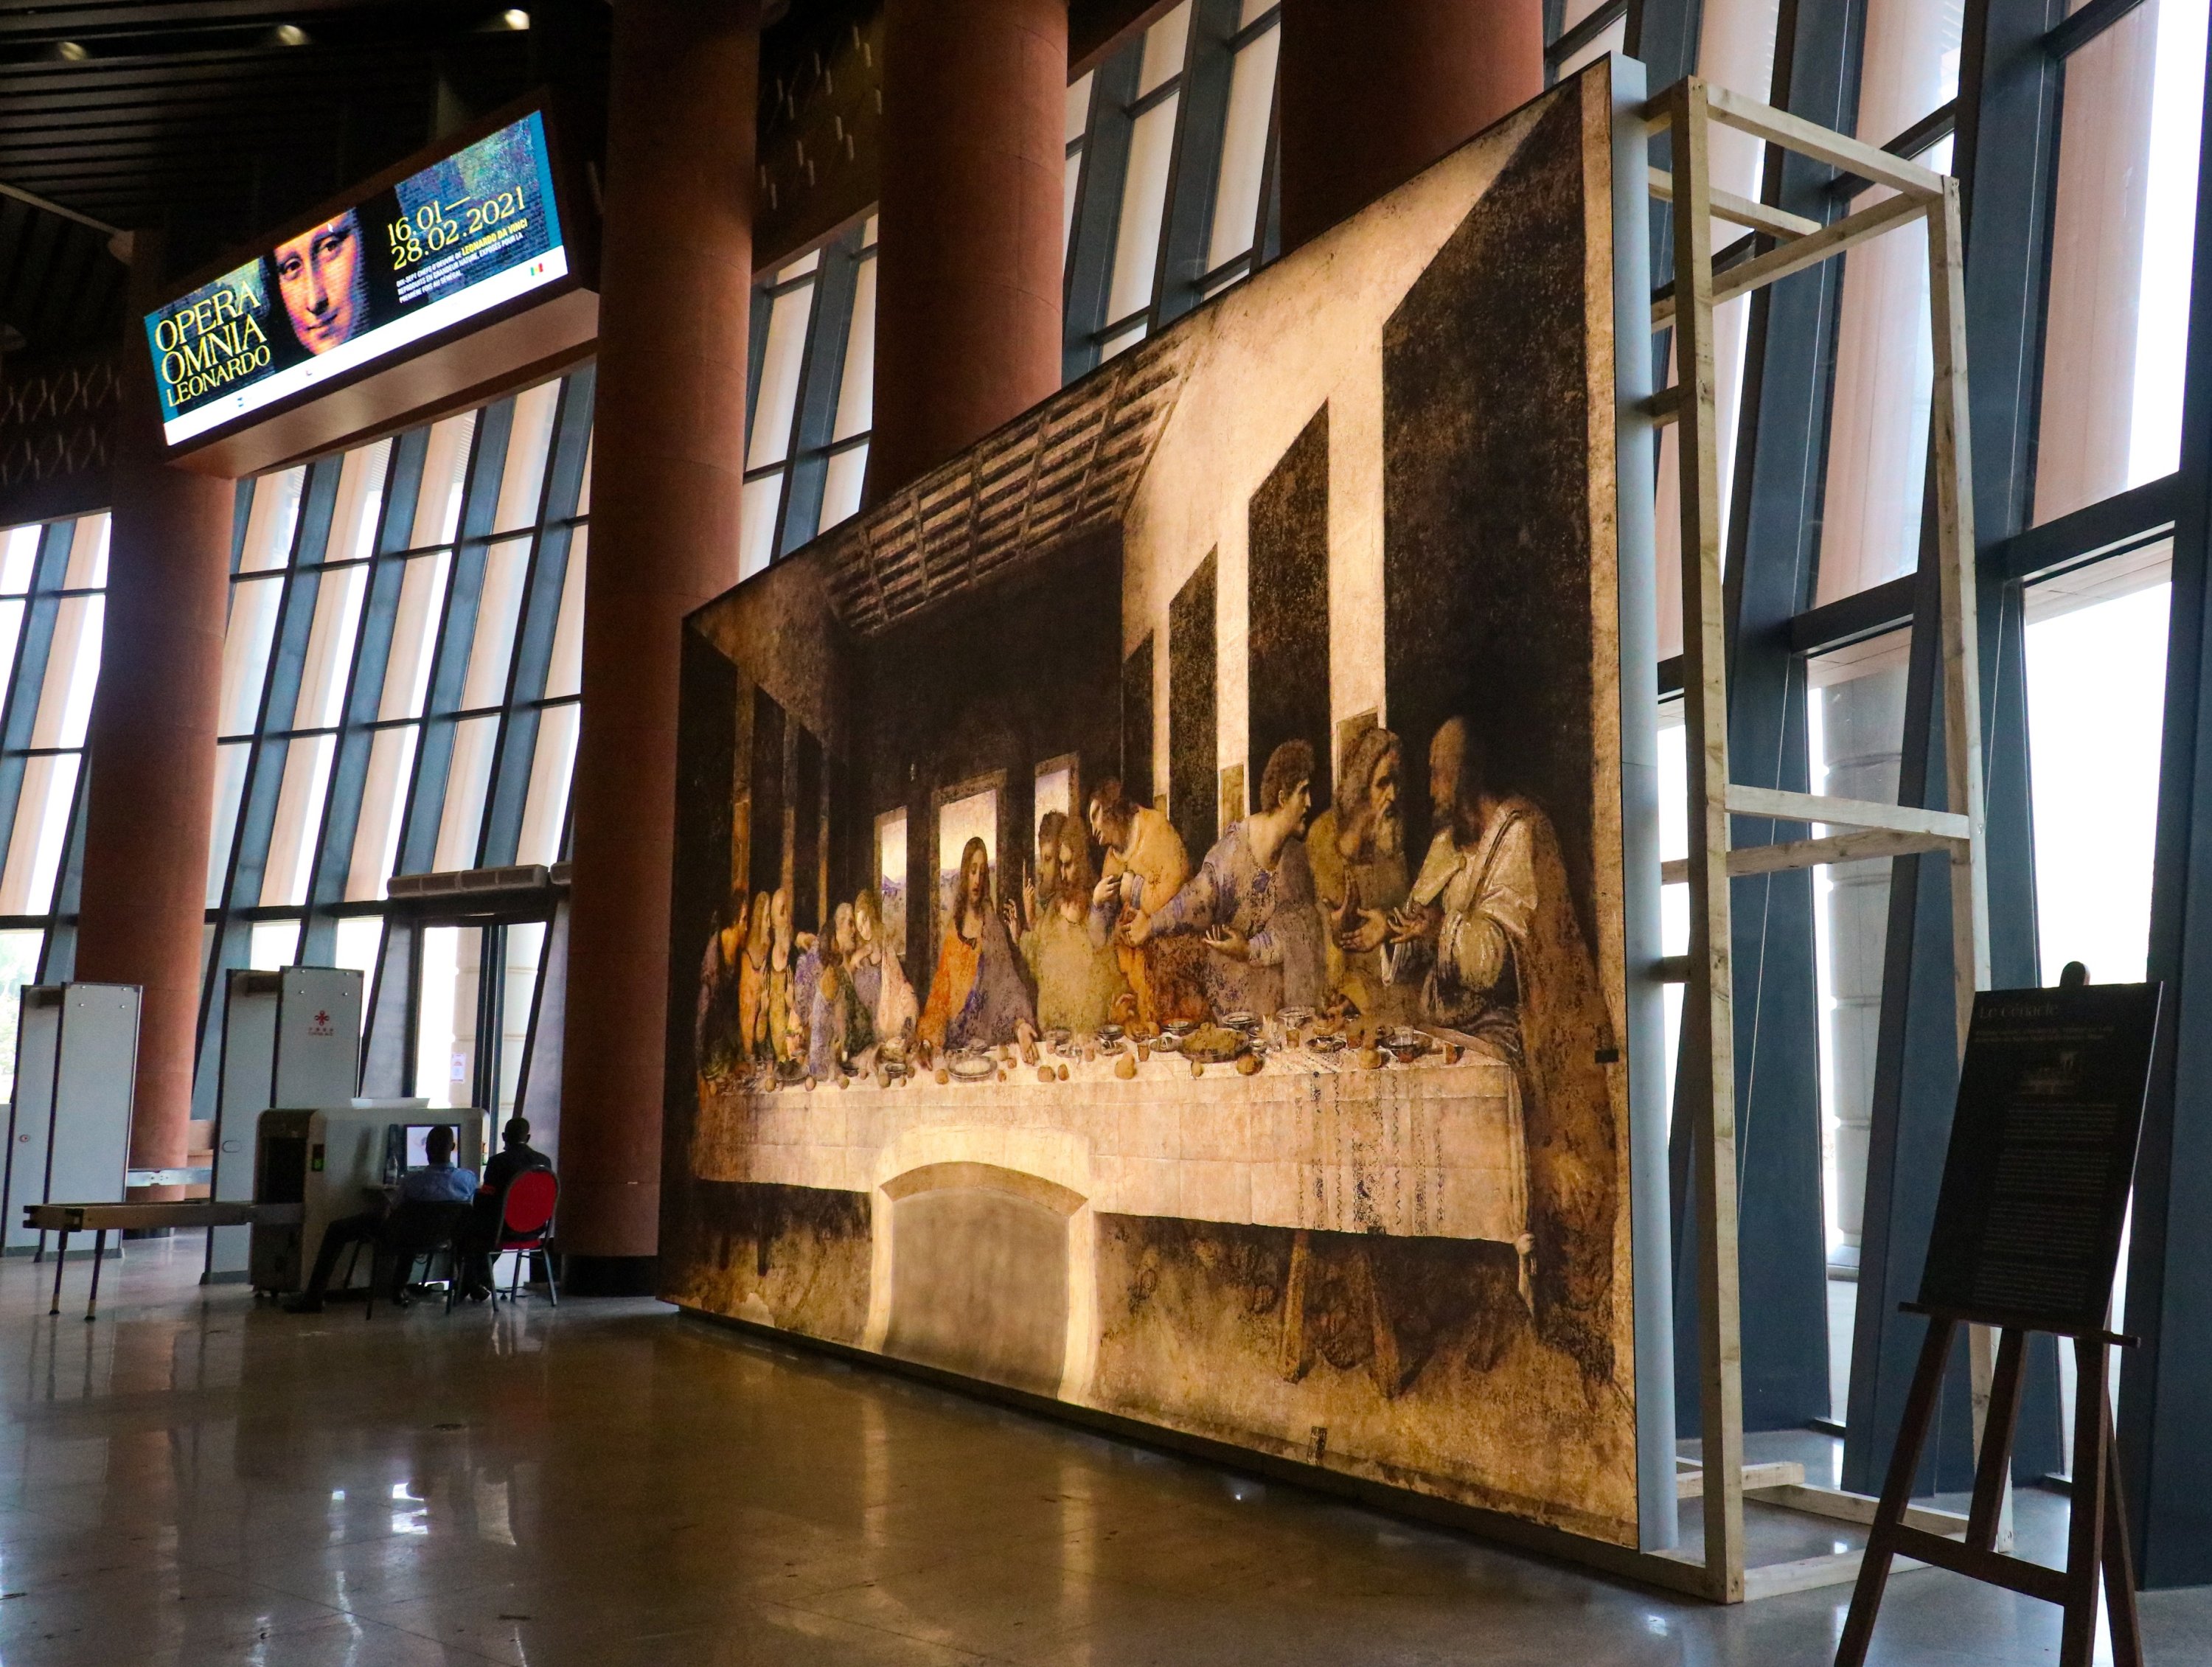 'The Last Supper' by Leonardo da Vinci on display during 'Opera Omnia Leonardo' exhibition, at the Museum of Black Civilisations in Dakar, Senegal, Jan. 22, 2021. (AA Photo)